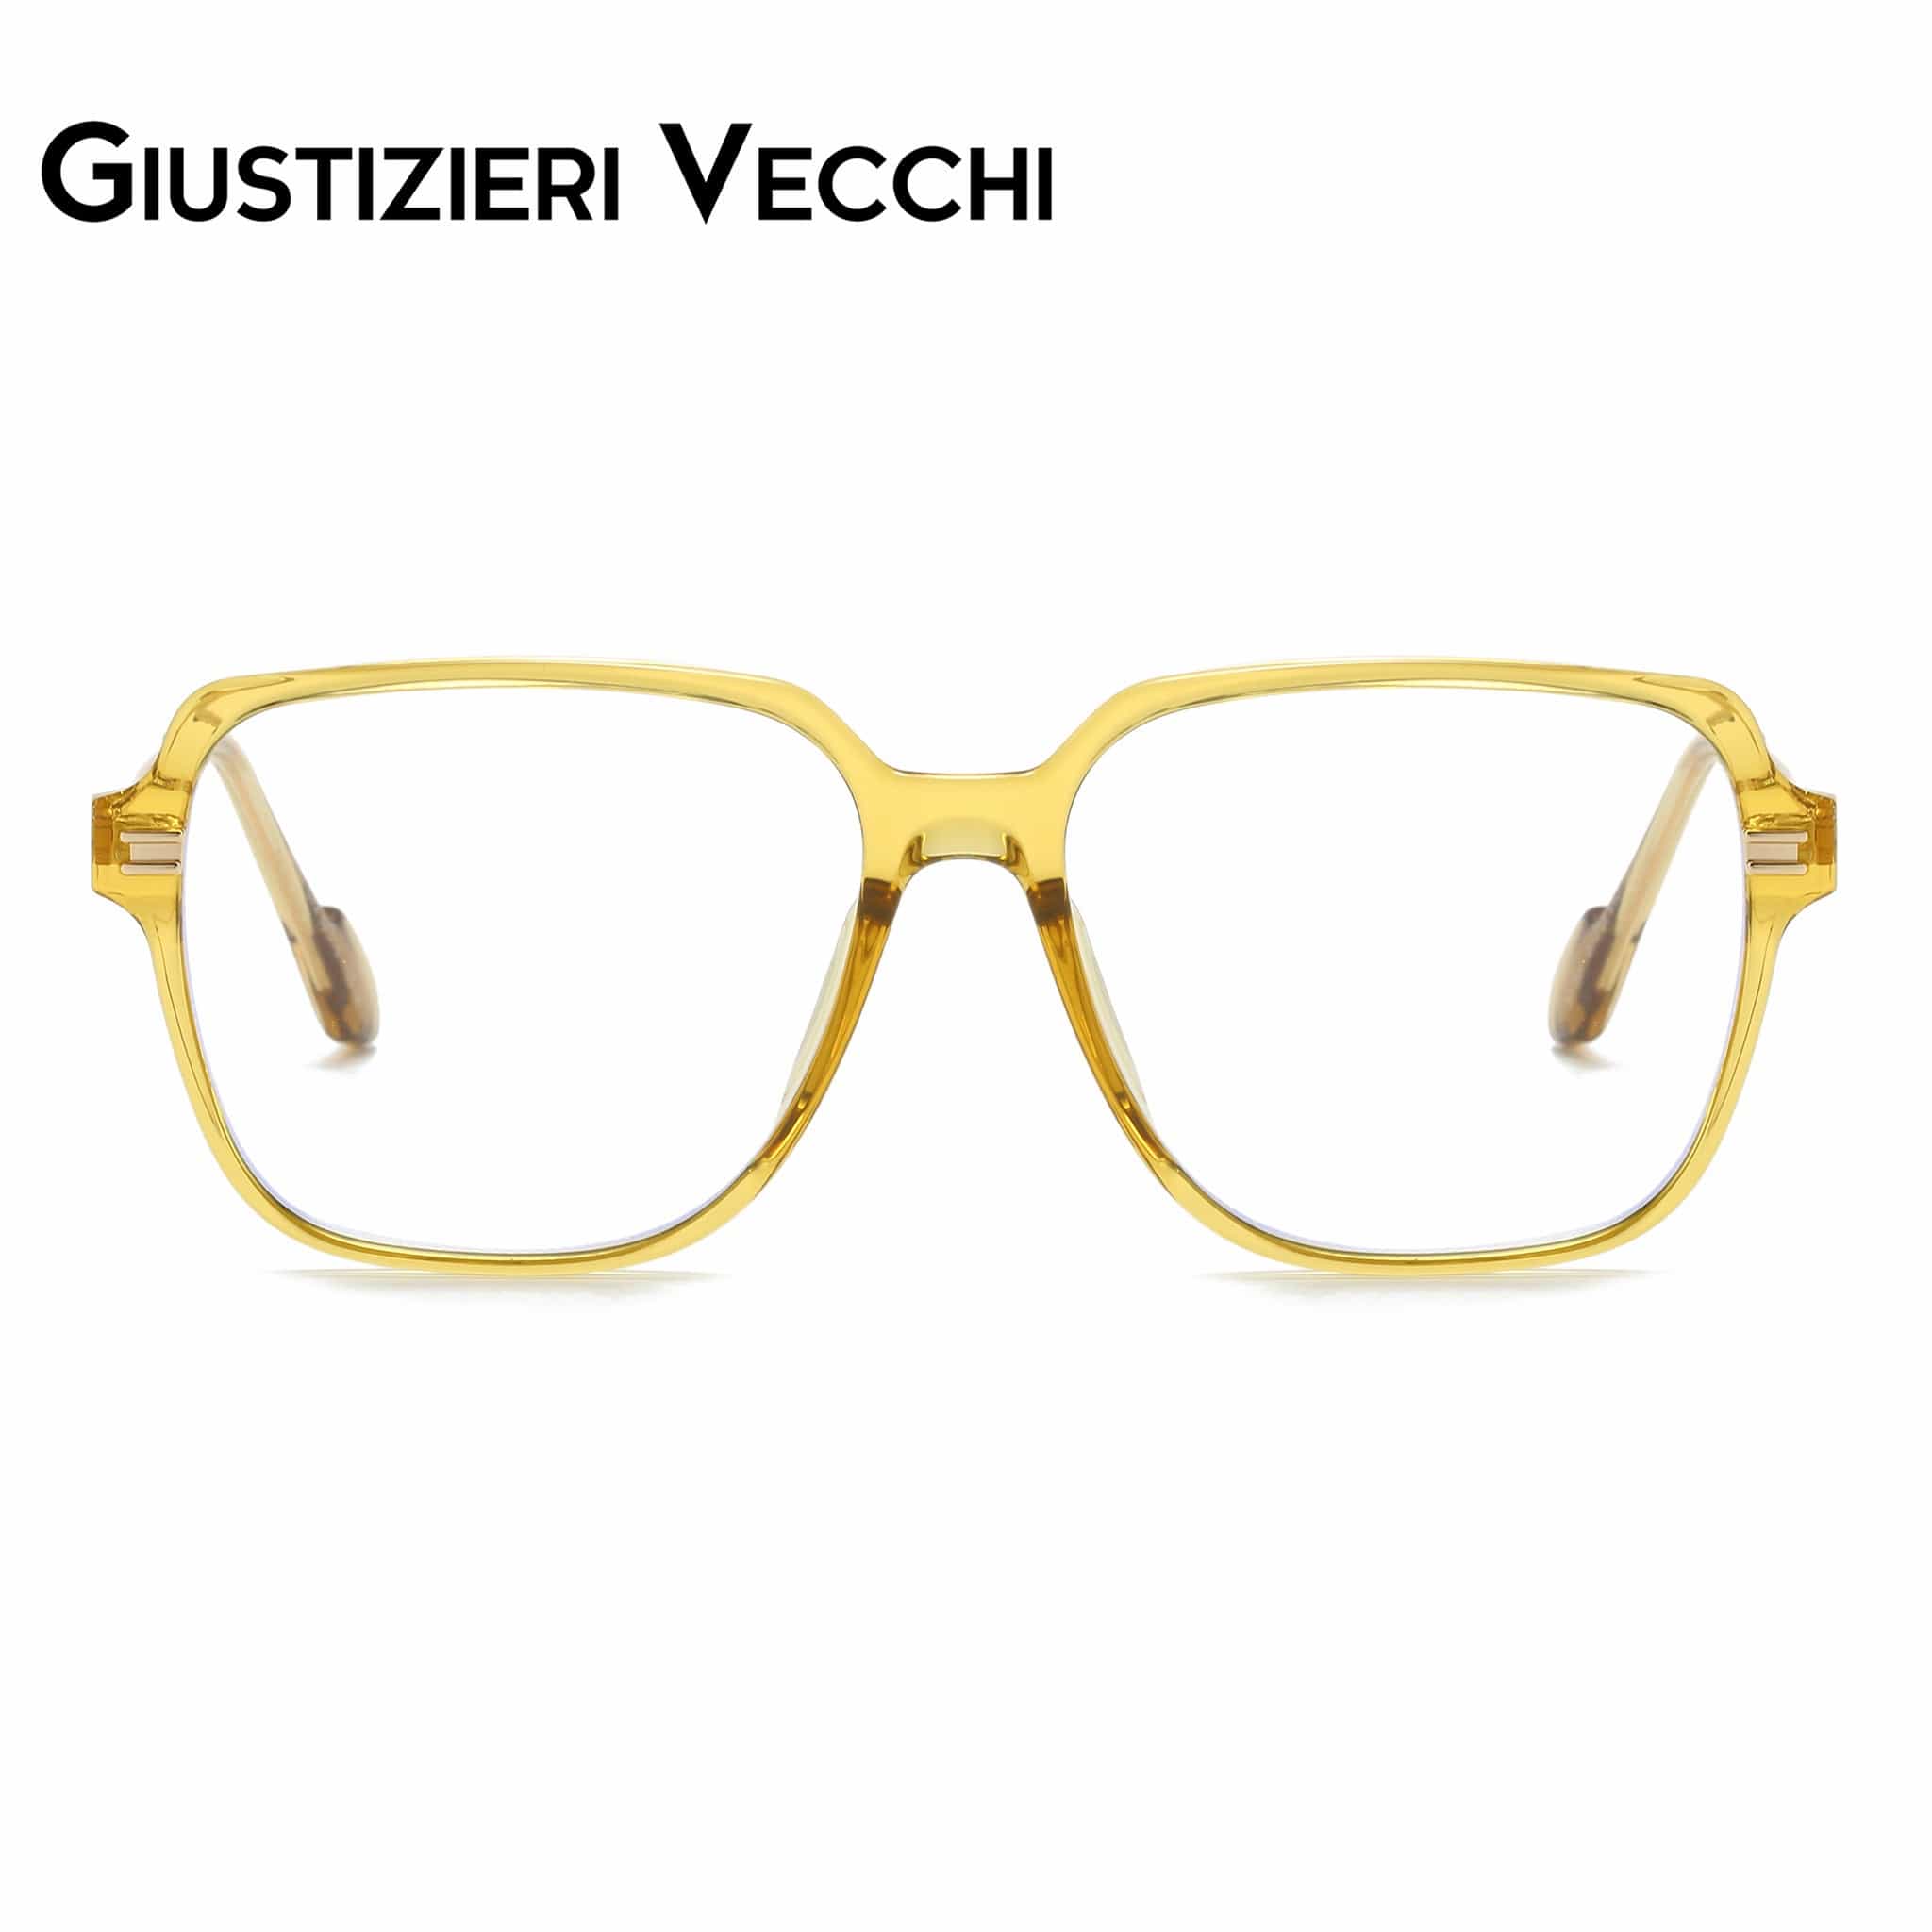 GIUSTIZIERI VECCHI Eyeglasses Large / Yellow Tan Crystal MysticRider Duo